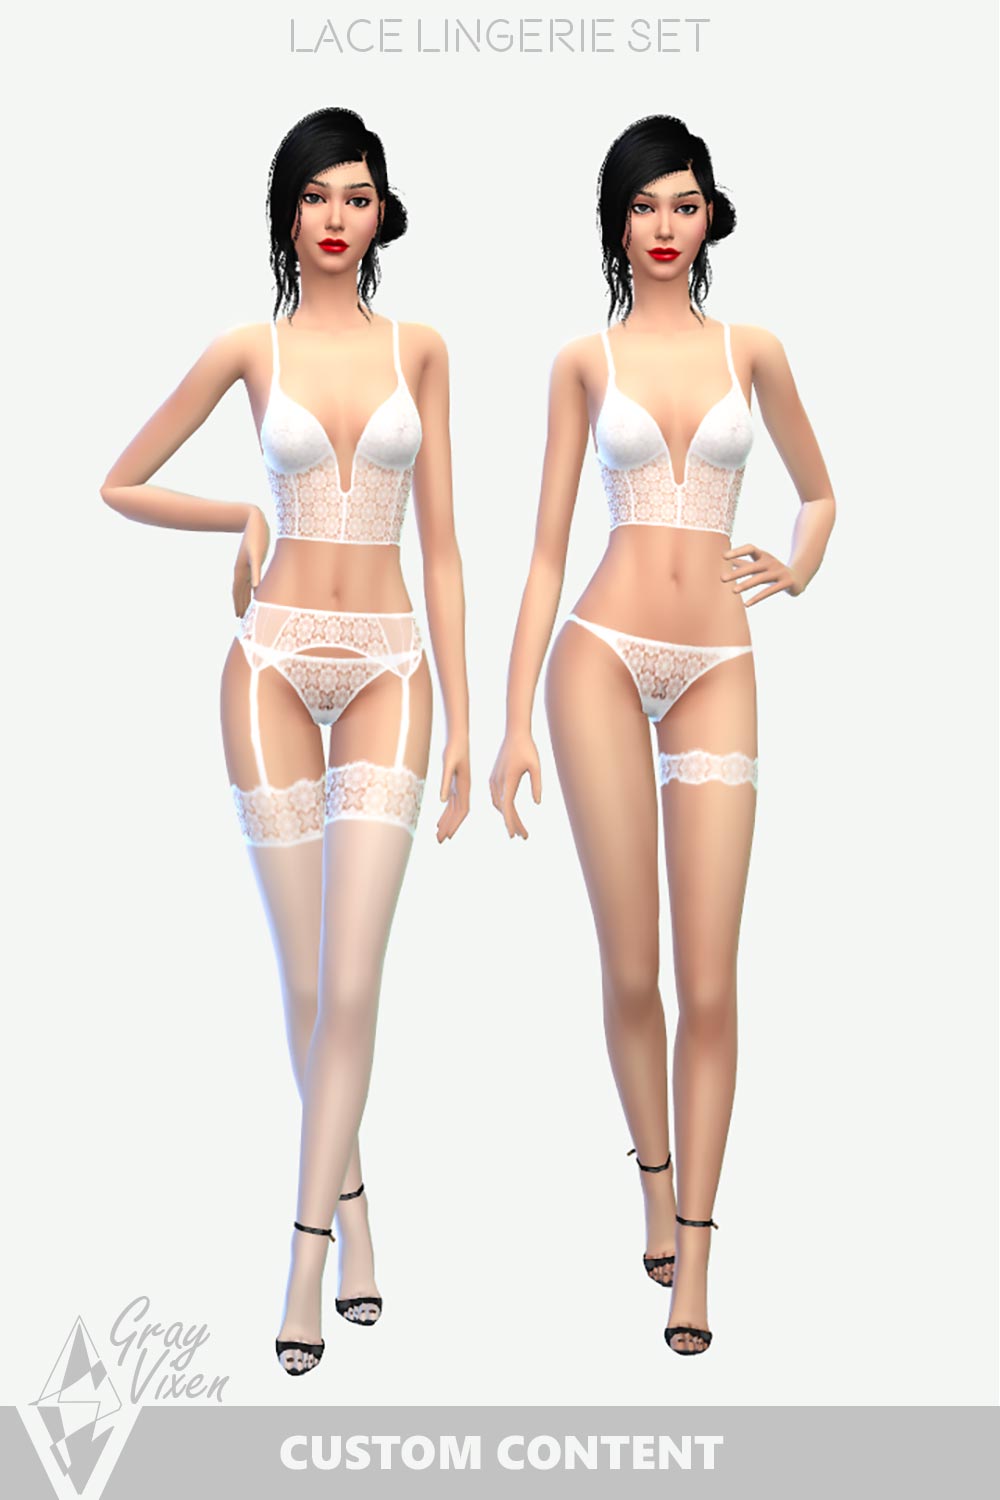 amanda ramos share sims 4 lingerie photos